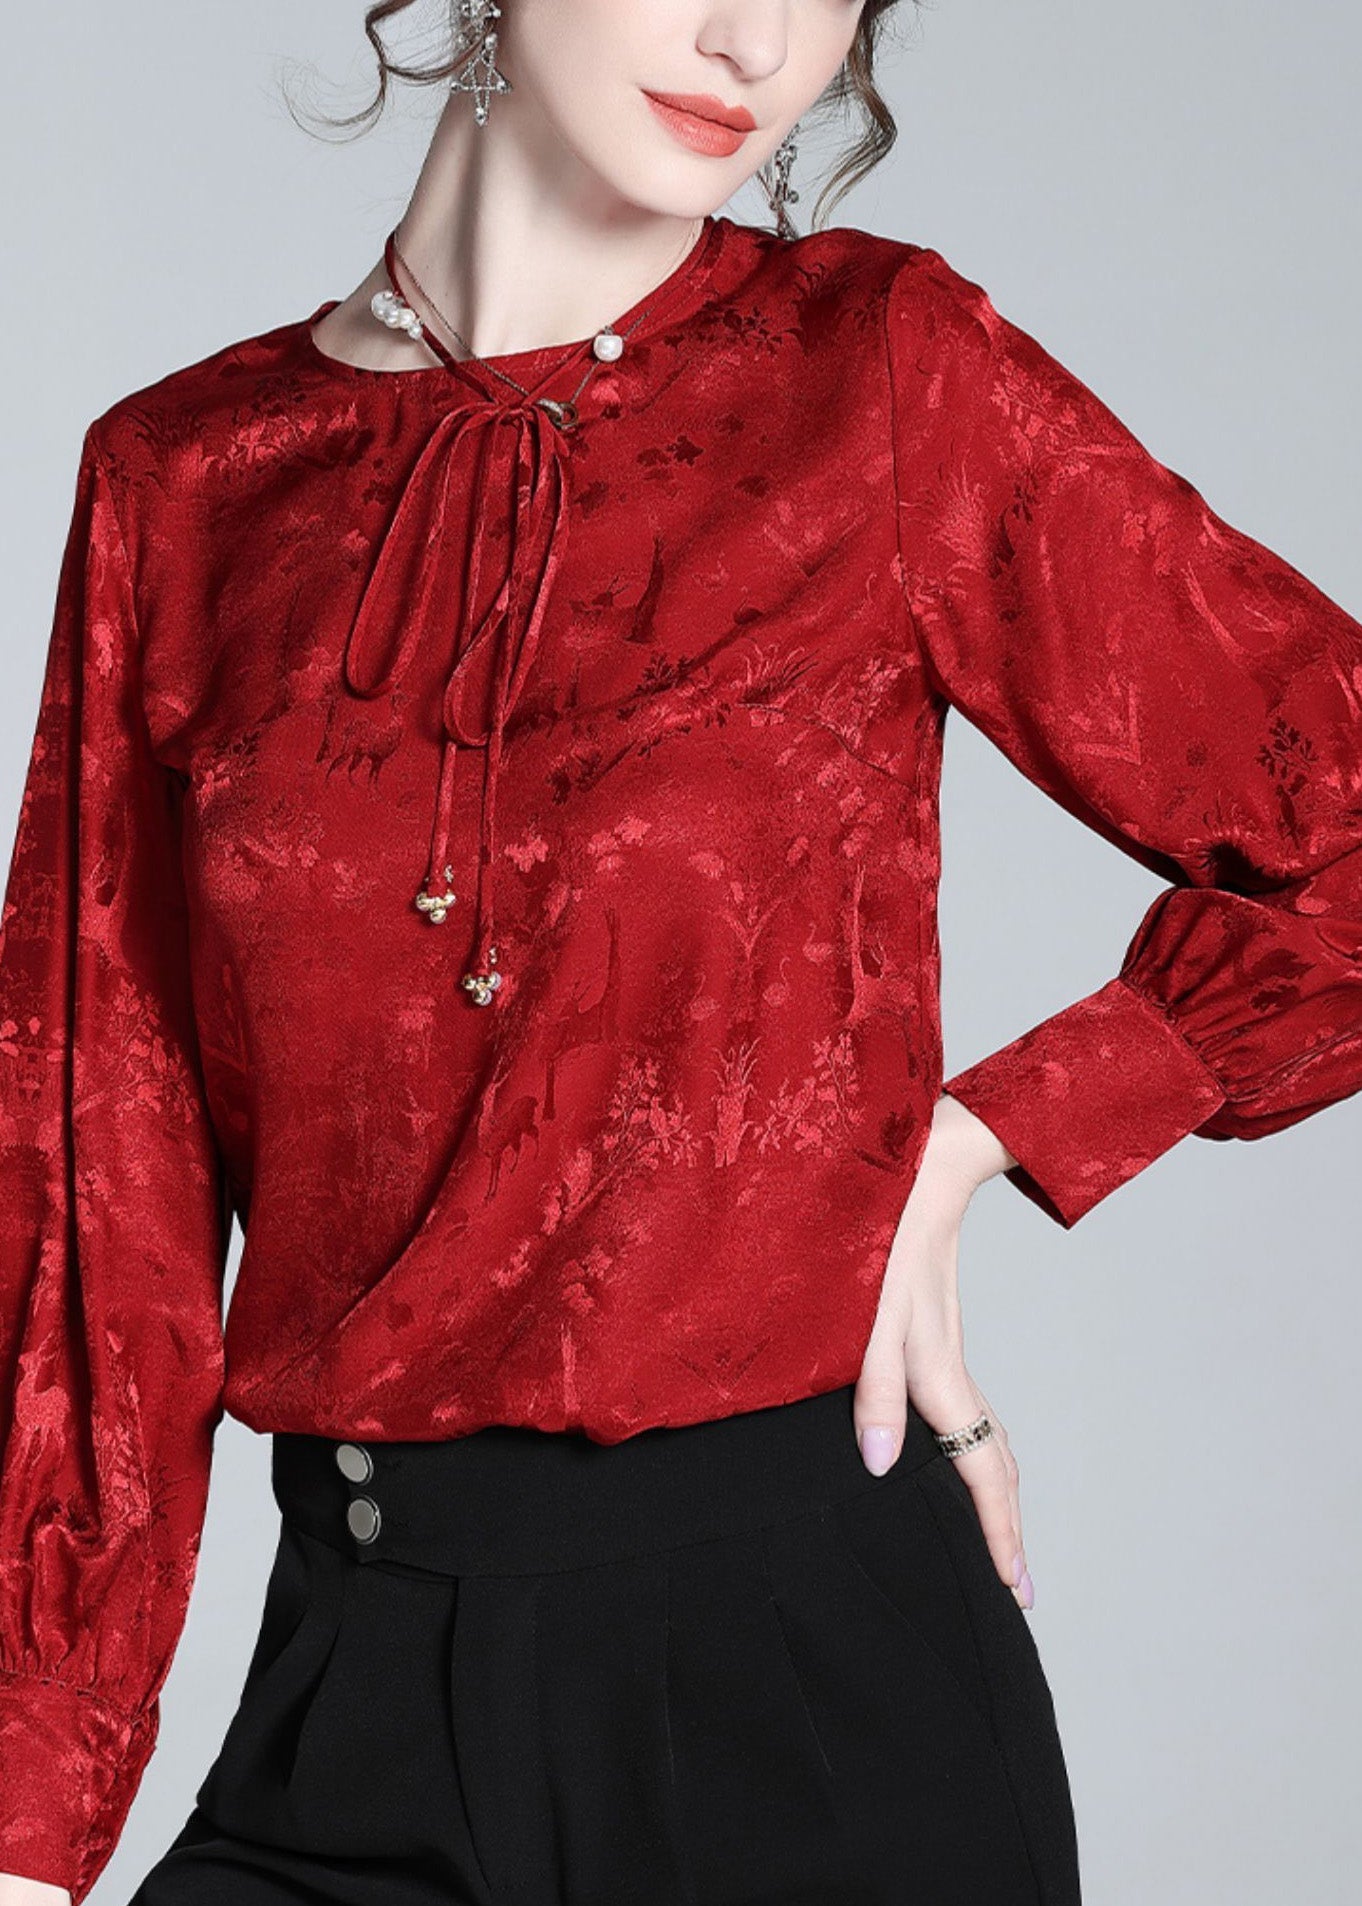 Jacquard Red O-Neck Neck TIie Silk Shirt Spring LY1020 - fabuloryshop